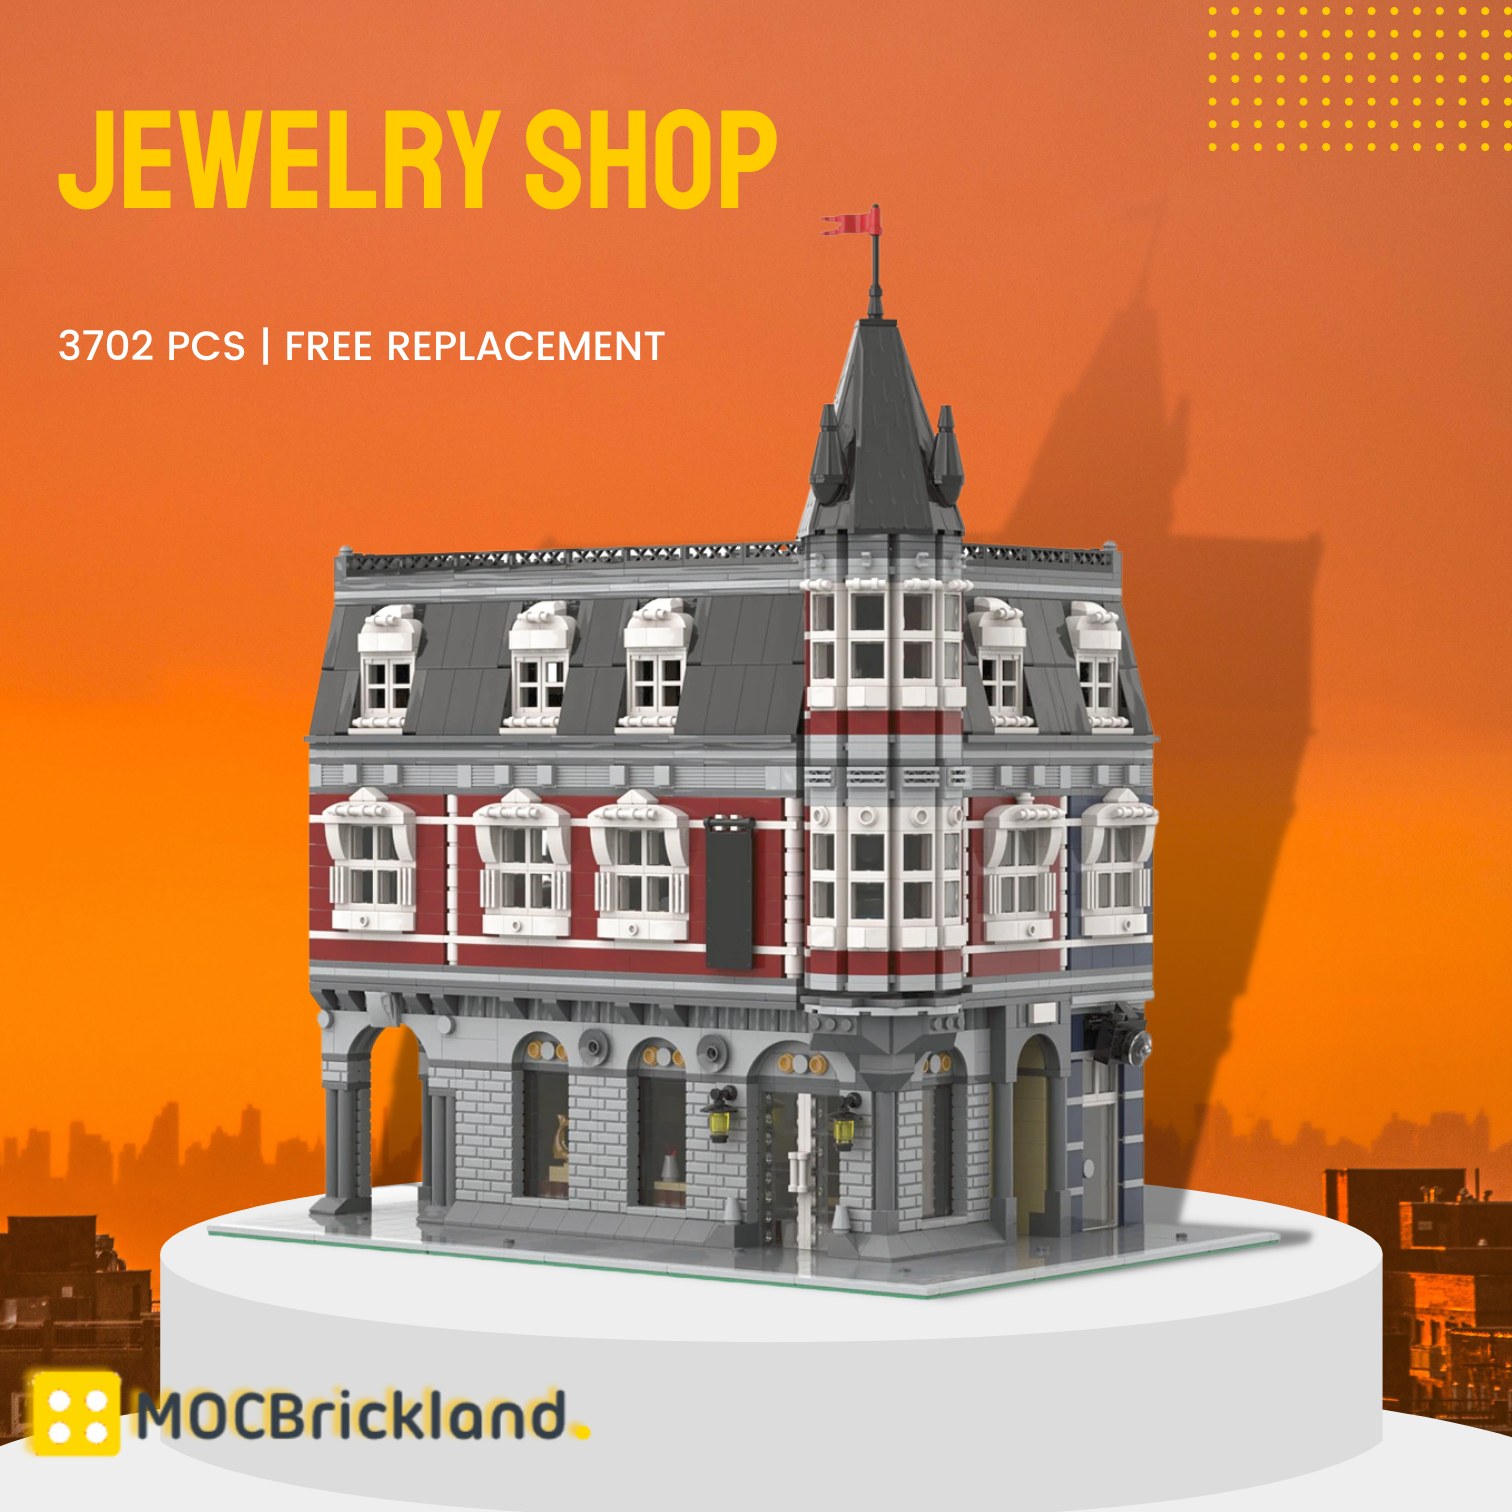 Jewelry Shop MOC 40348